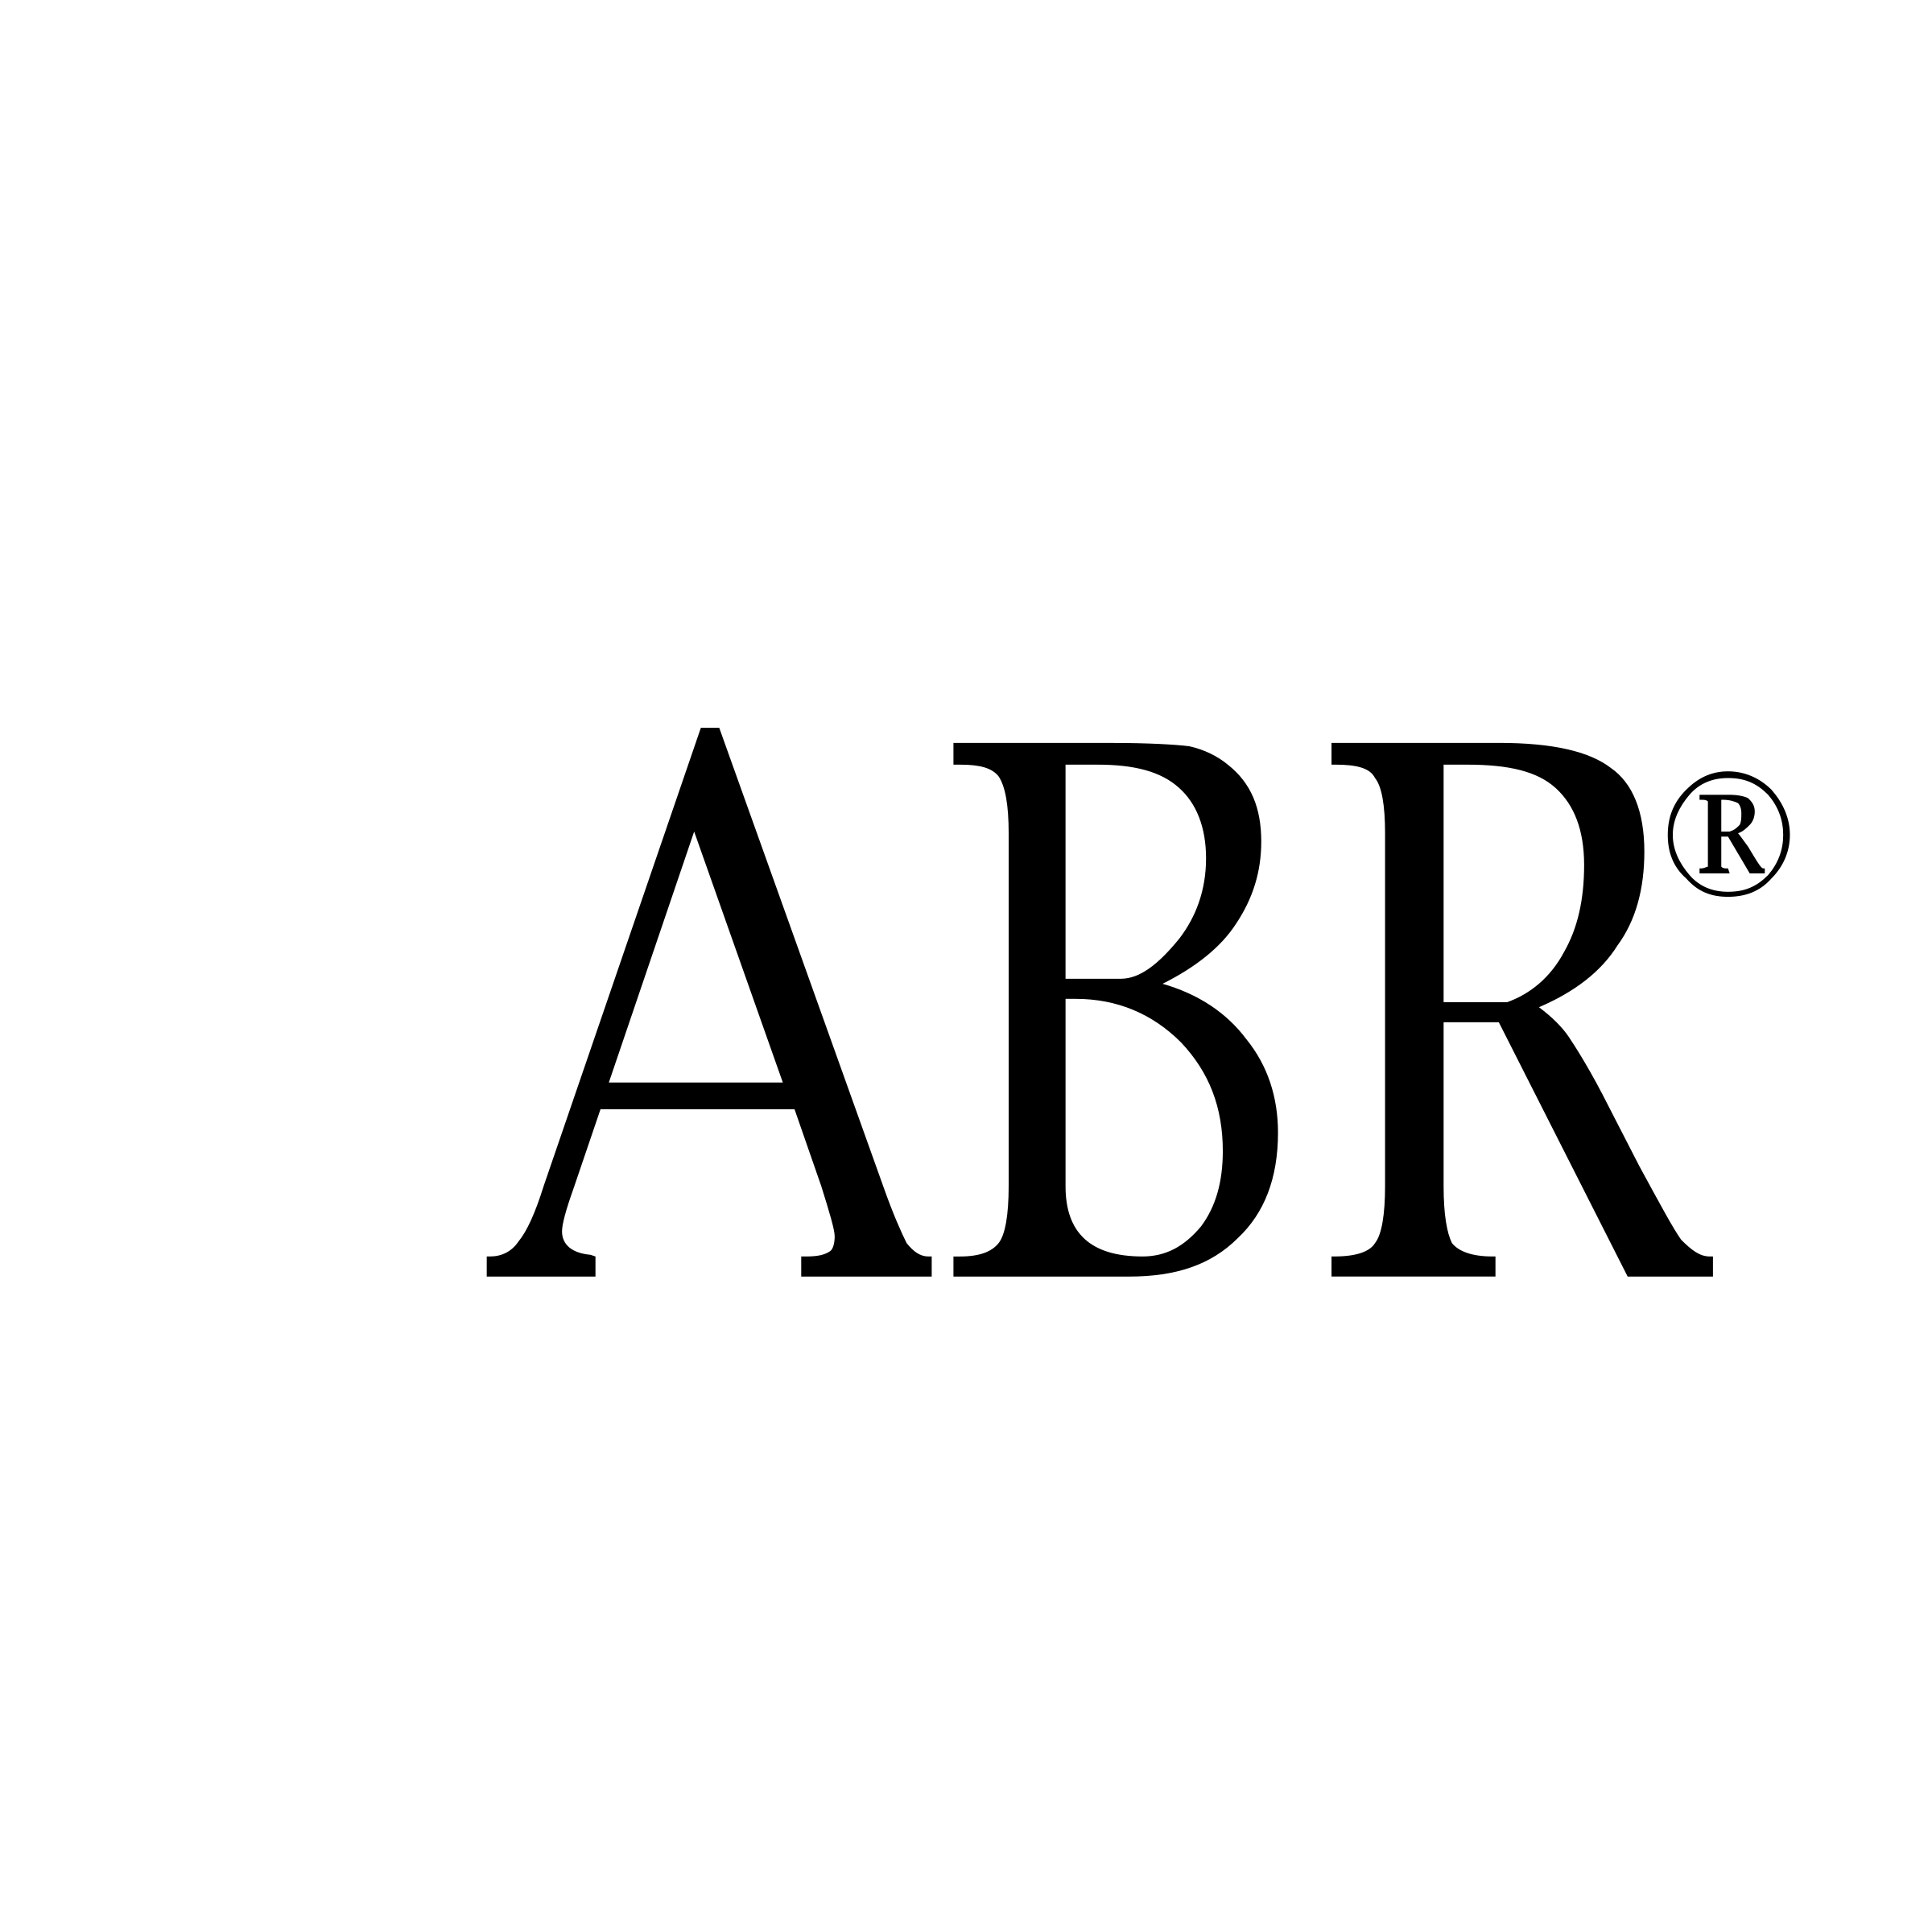 ABR Logo - ABR Logo PNG Transparent & SVG Vector - Freebie Supply